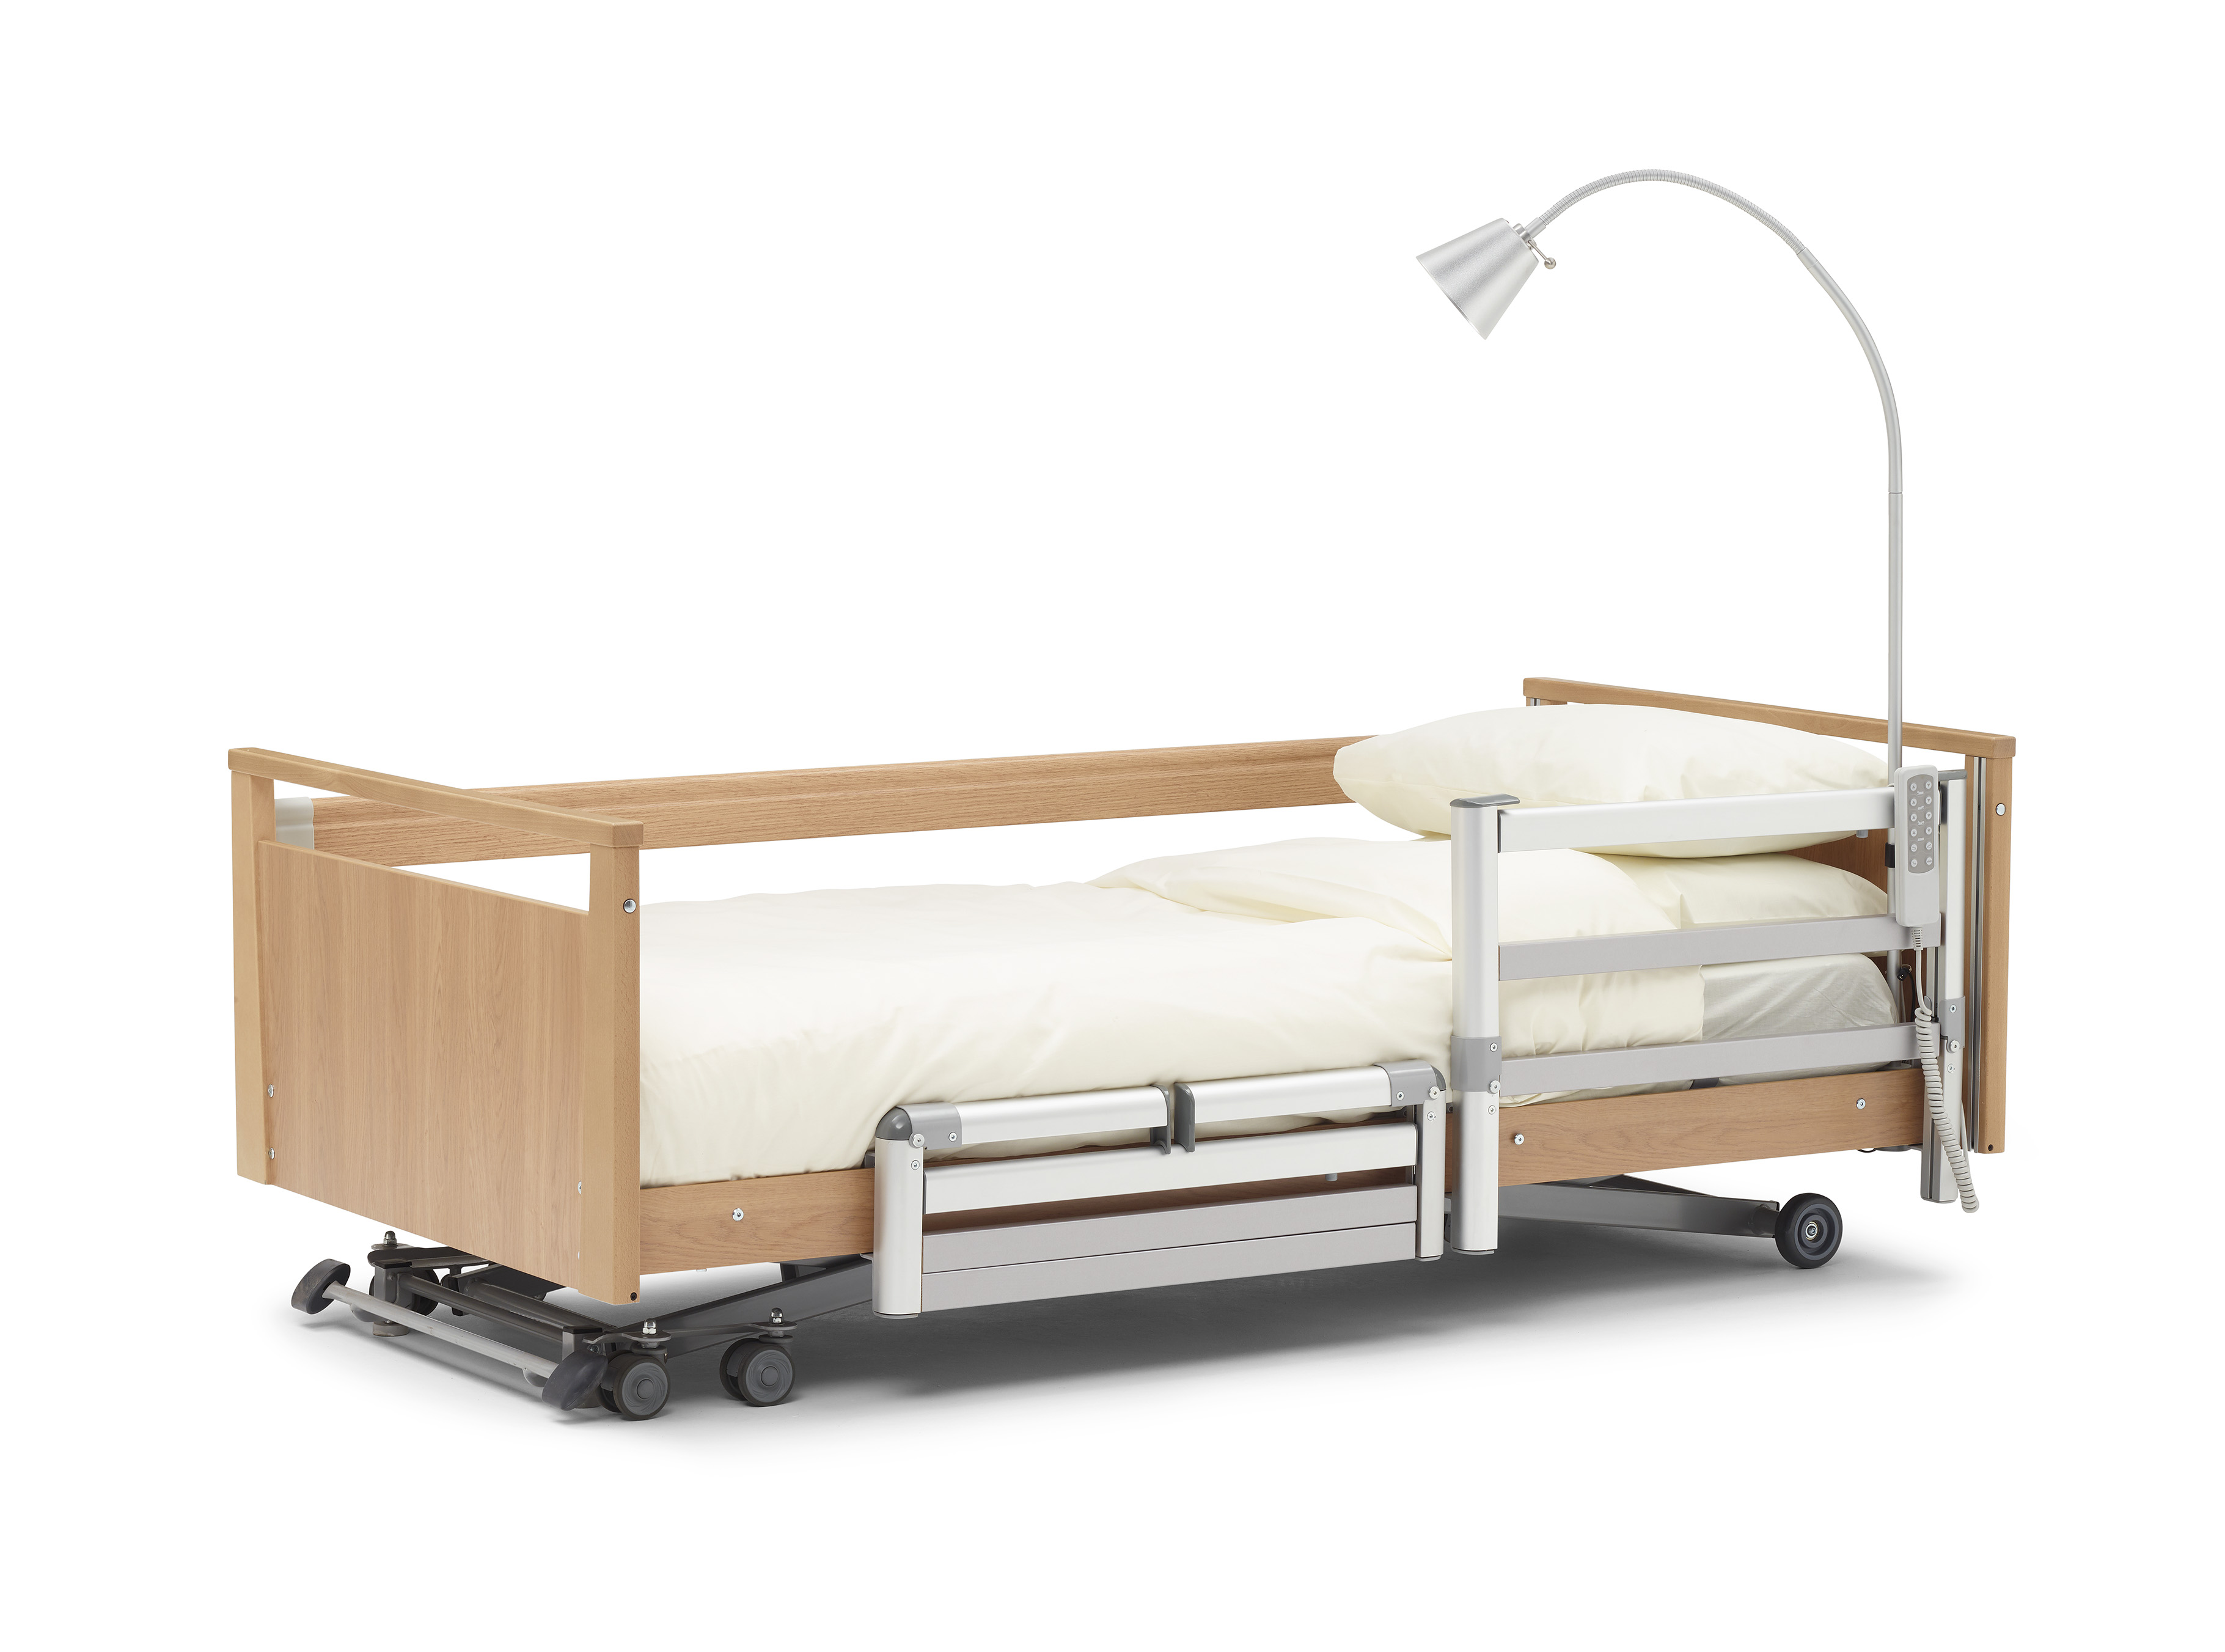 Impress 3 bed c/w Contemporary head/foot boards, side skirts and 4 x aluminium split side rails
Finish: Light Sorano Oak